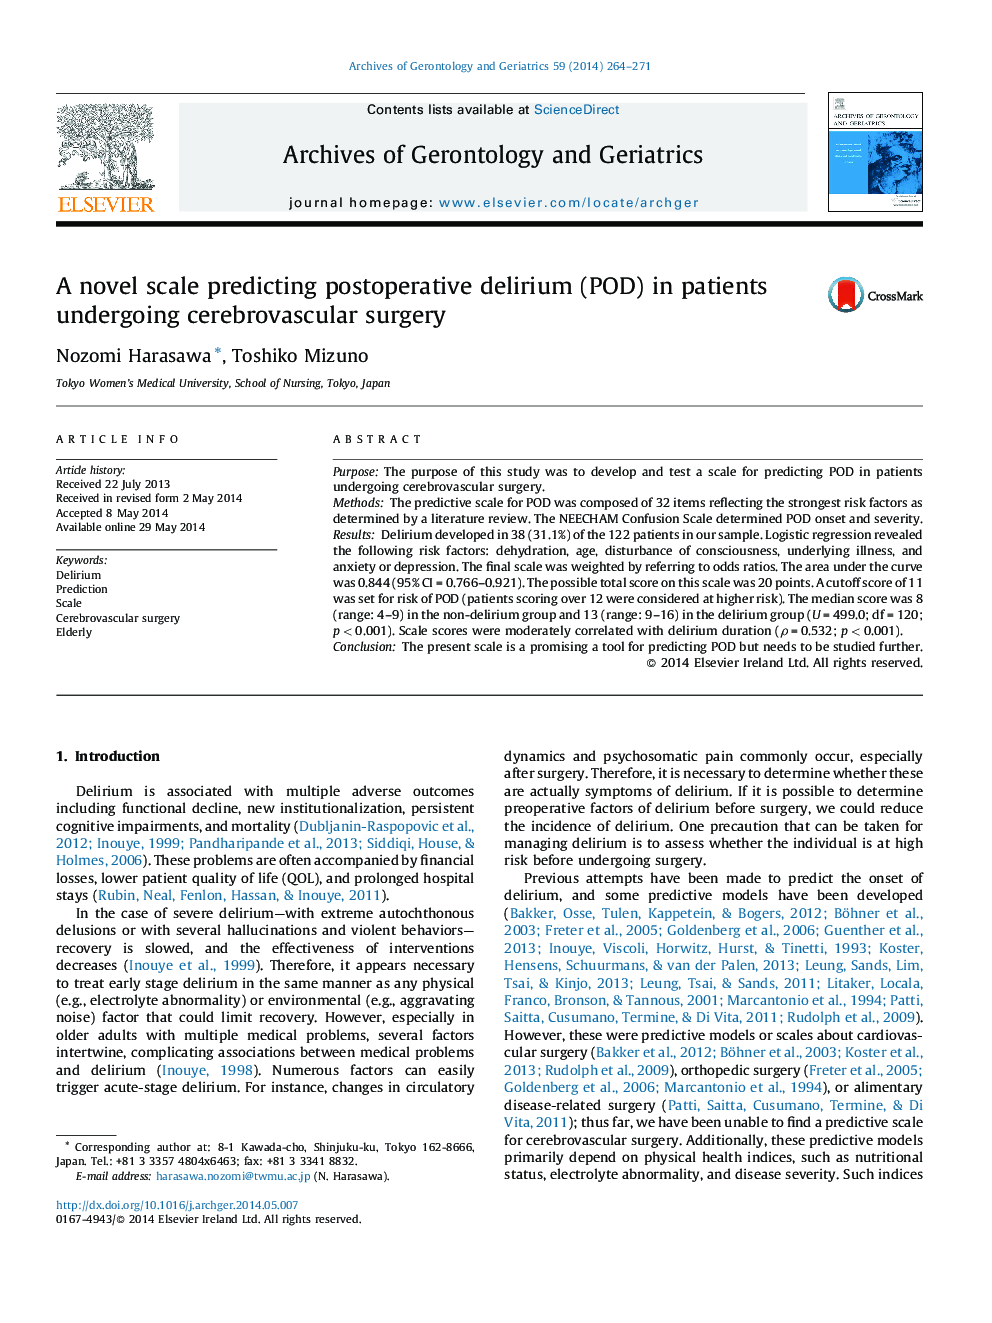 A novel scale predicting postoperative delirium (POD) in patients undergoing cerebrovascular surgery